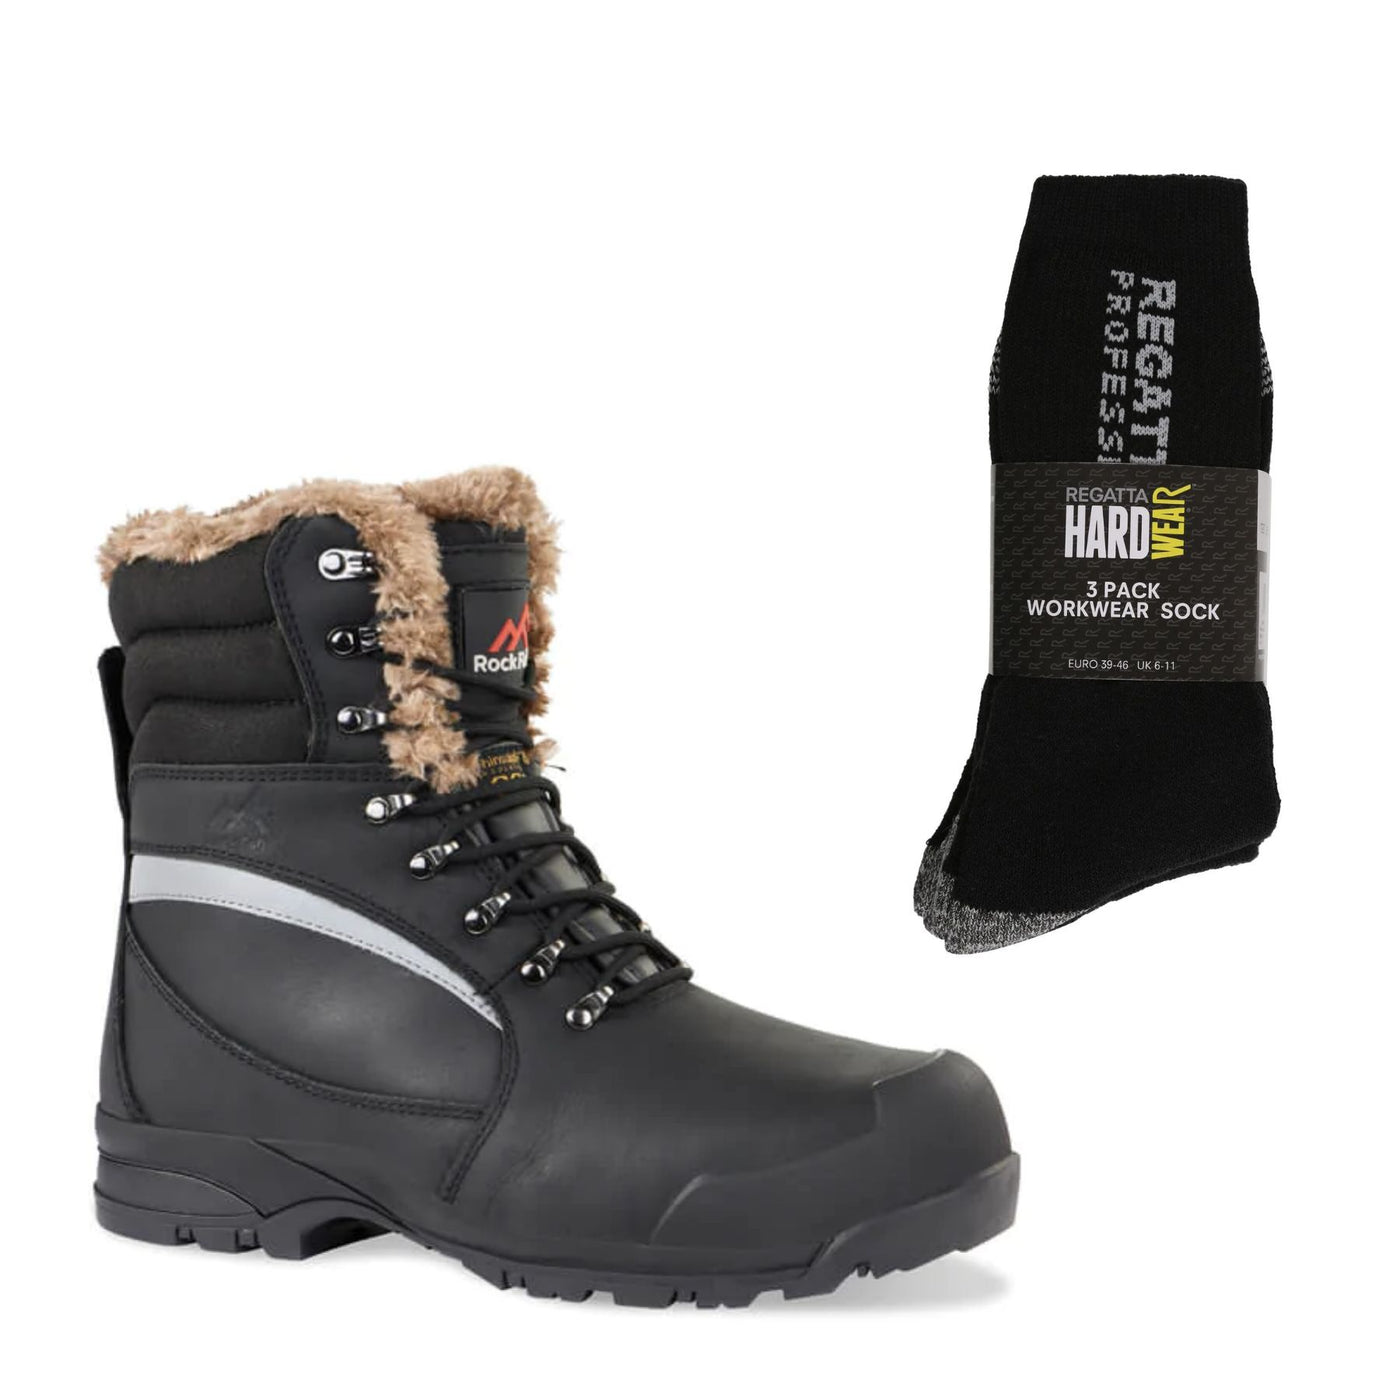 RockFall Alaska Special Offer Pack - RF001 Freezer Work Boots + 3 Pairs Work Socks